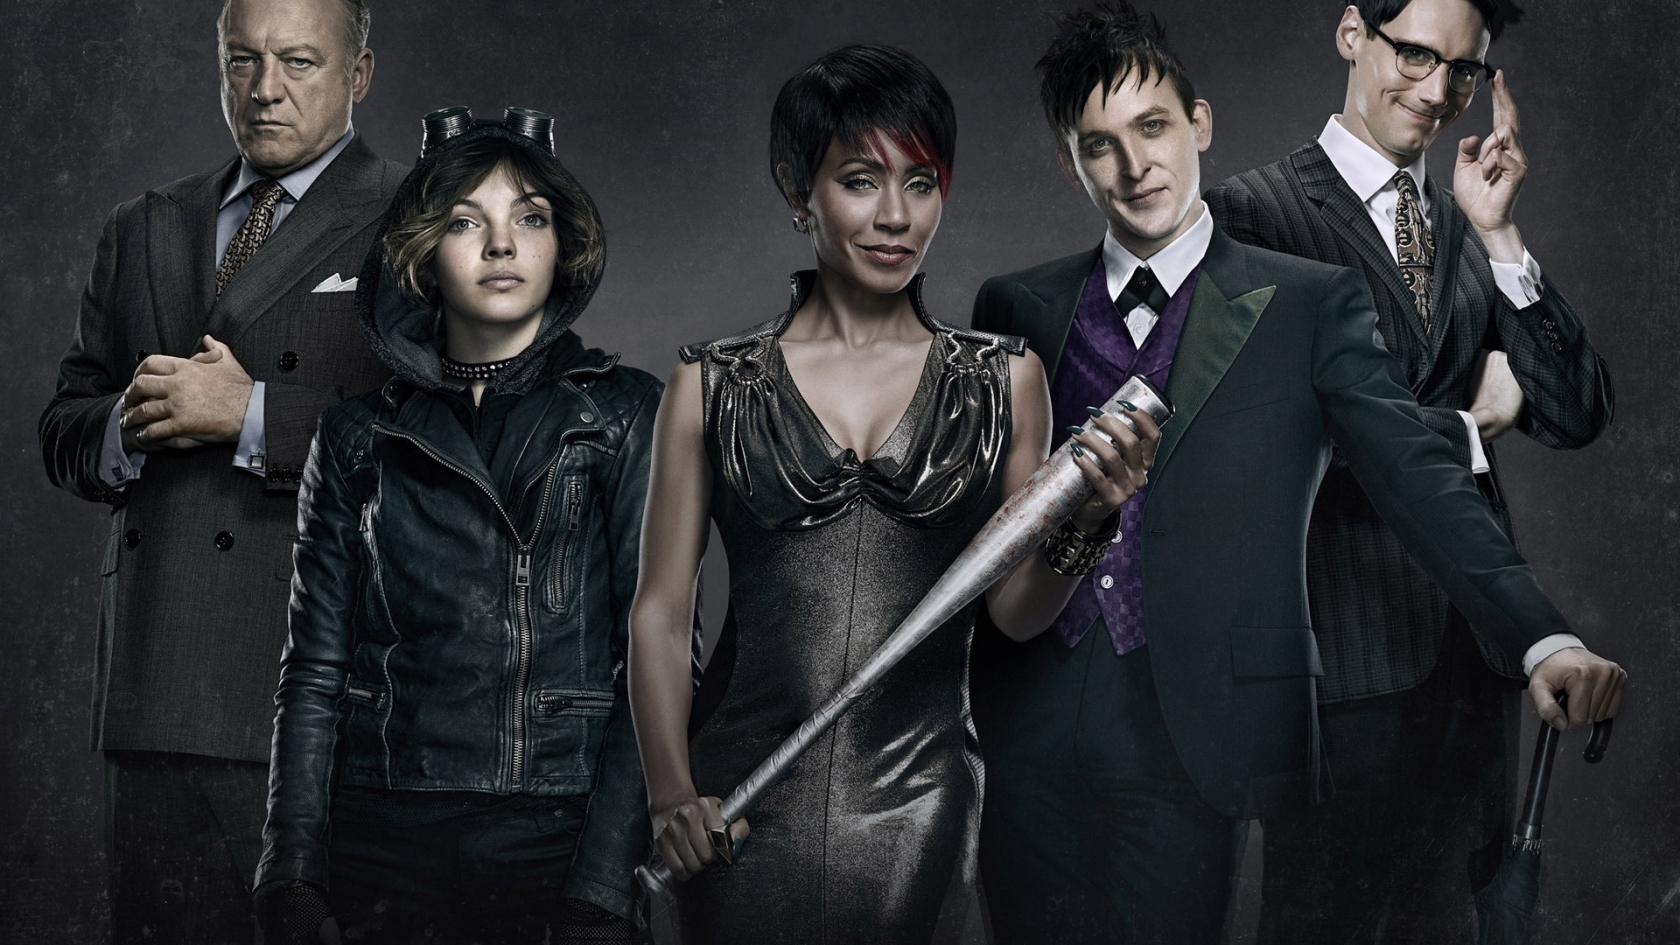 Gotham Villain Cast for 1680 x 945 HDTV resolution